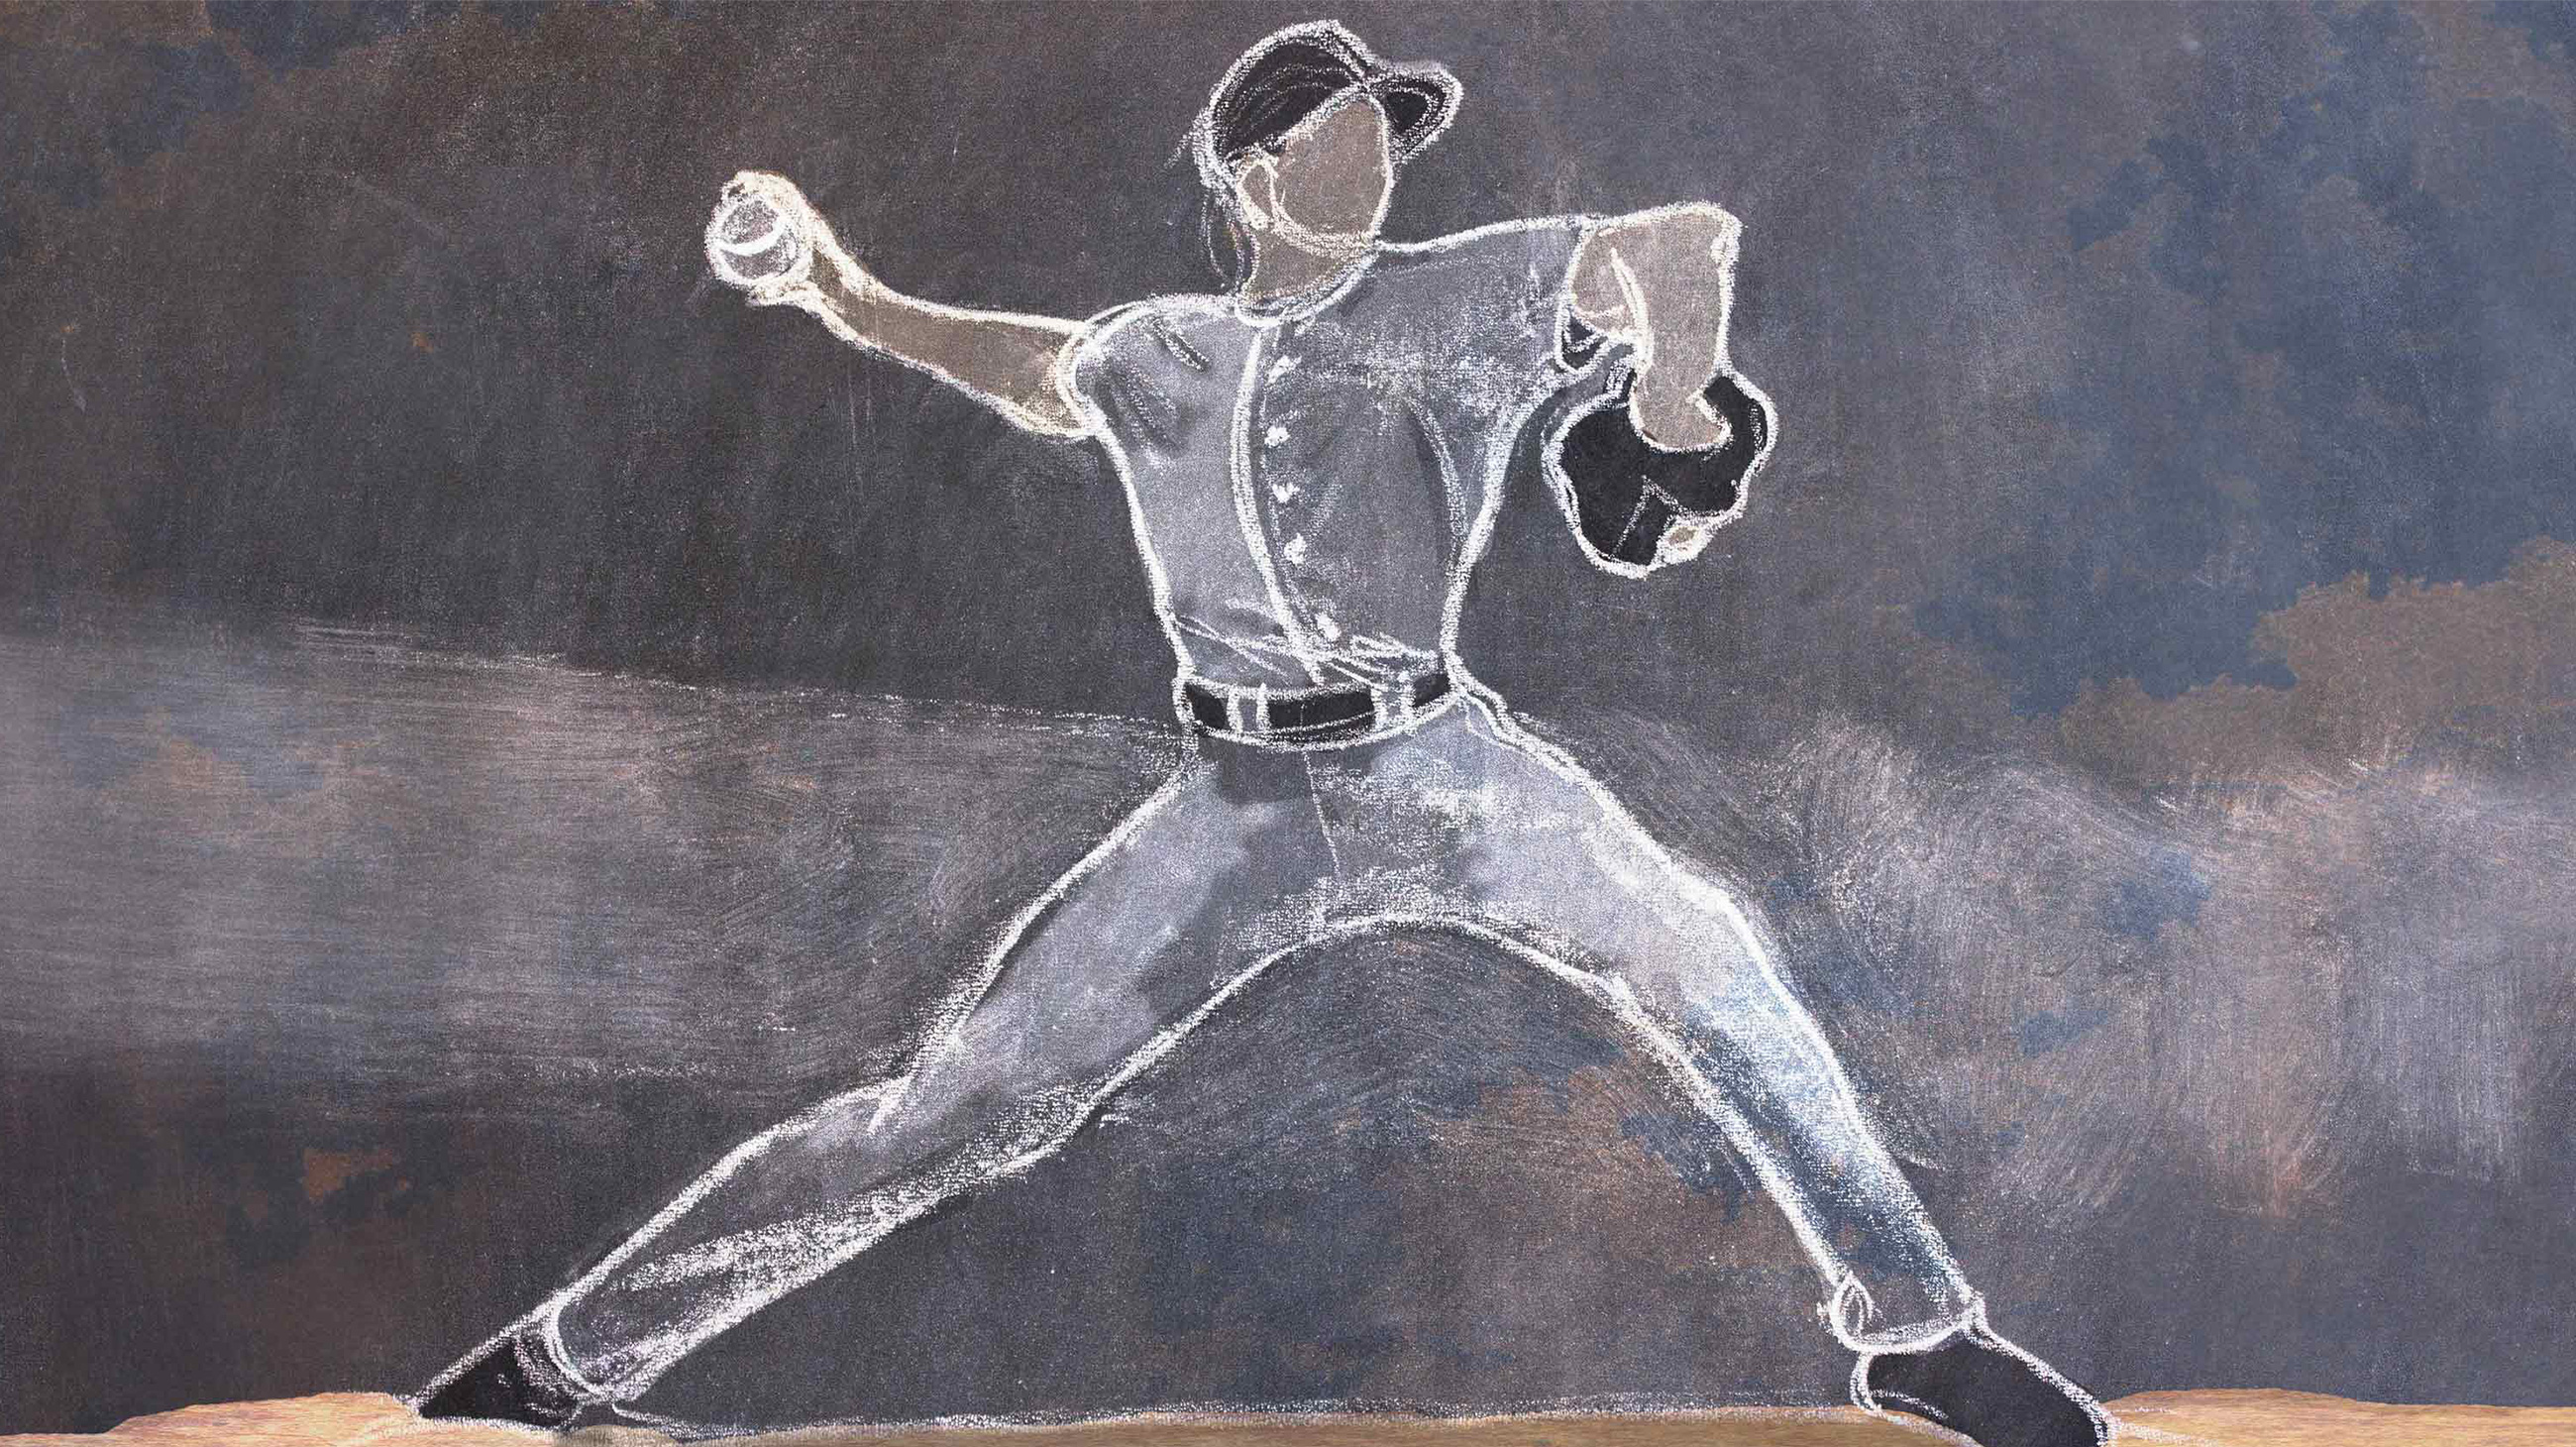 Illustration of baseball pitcher